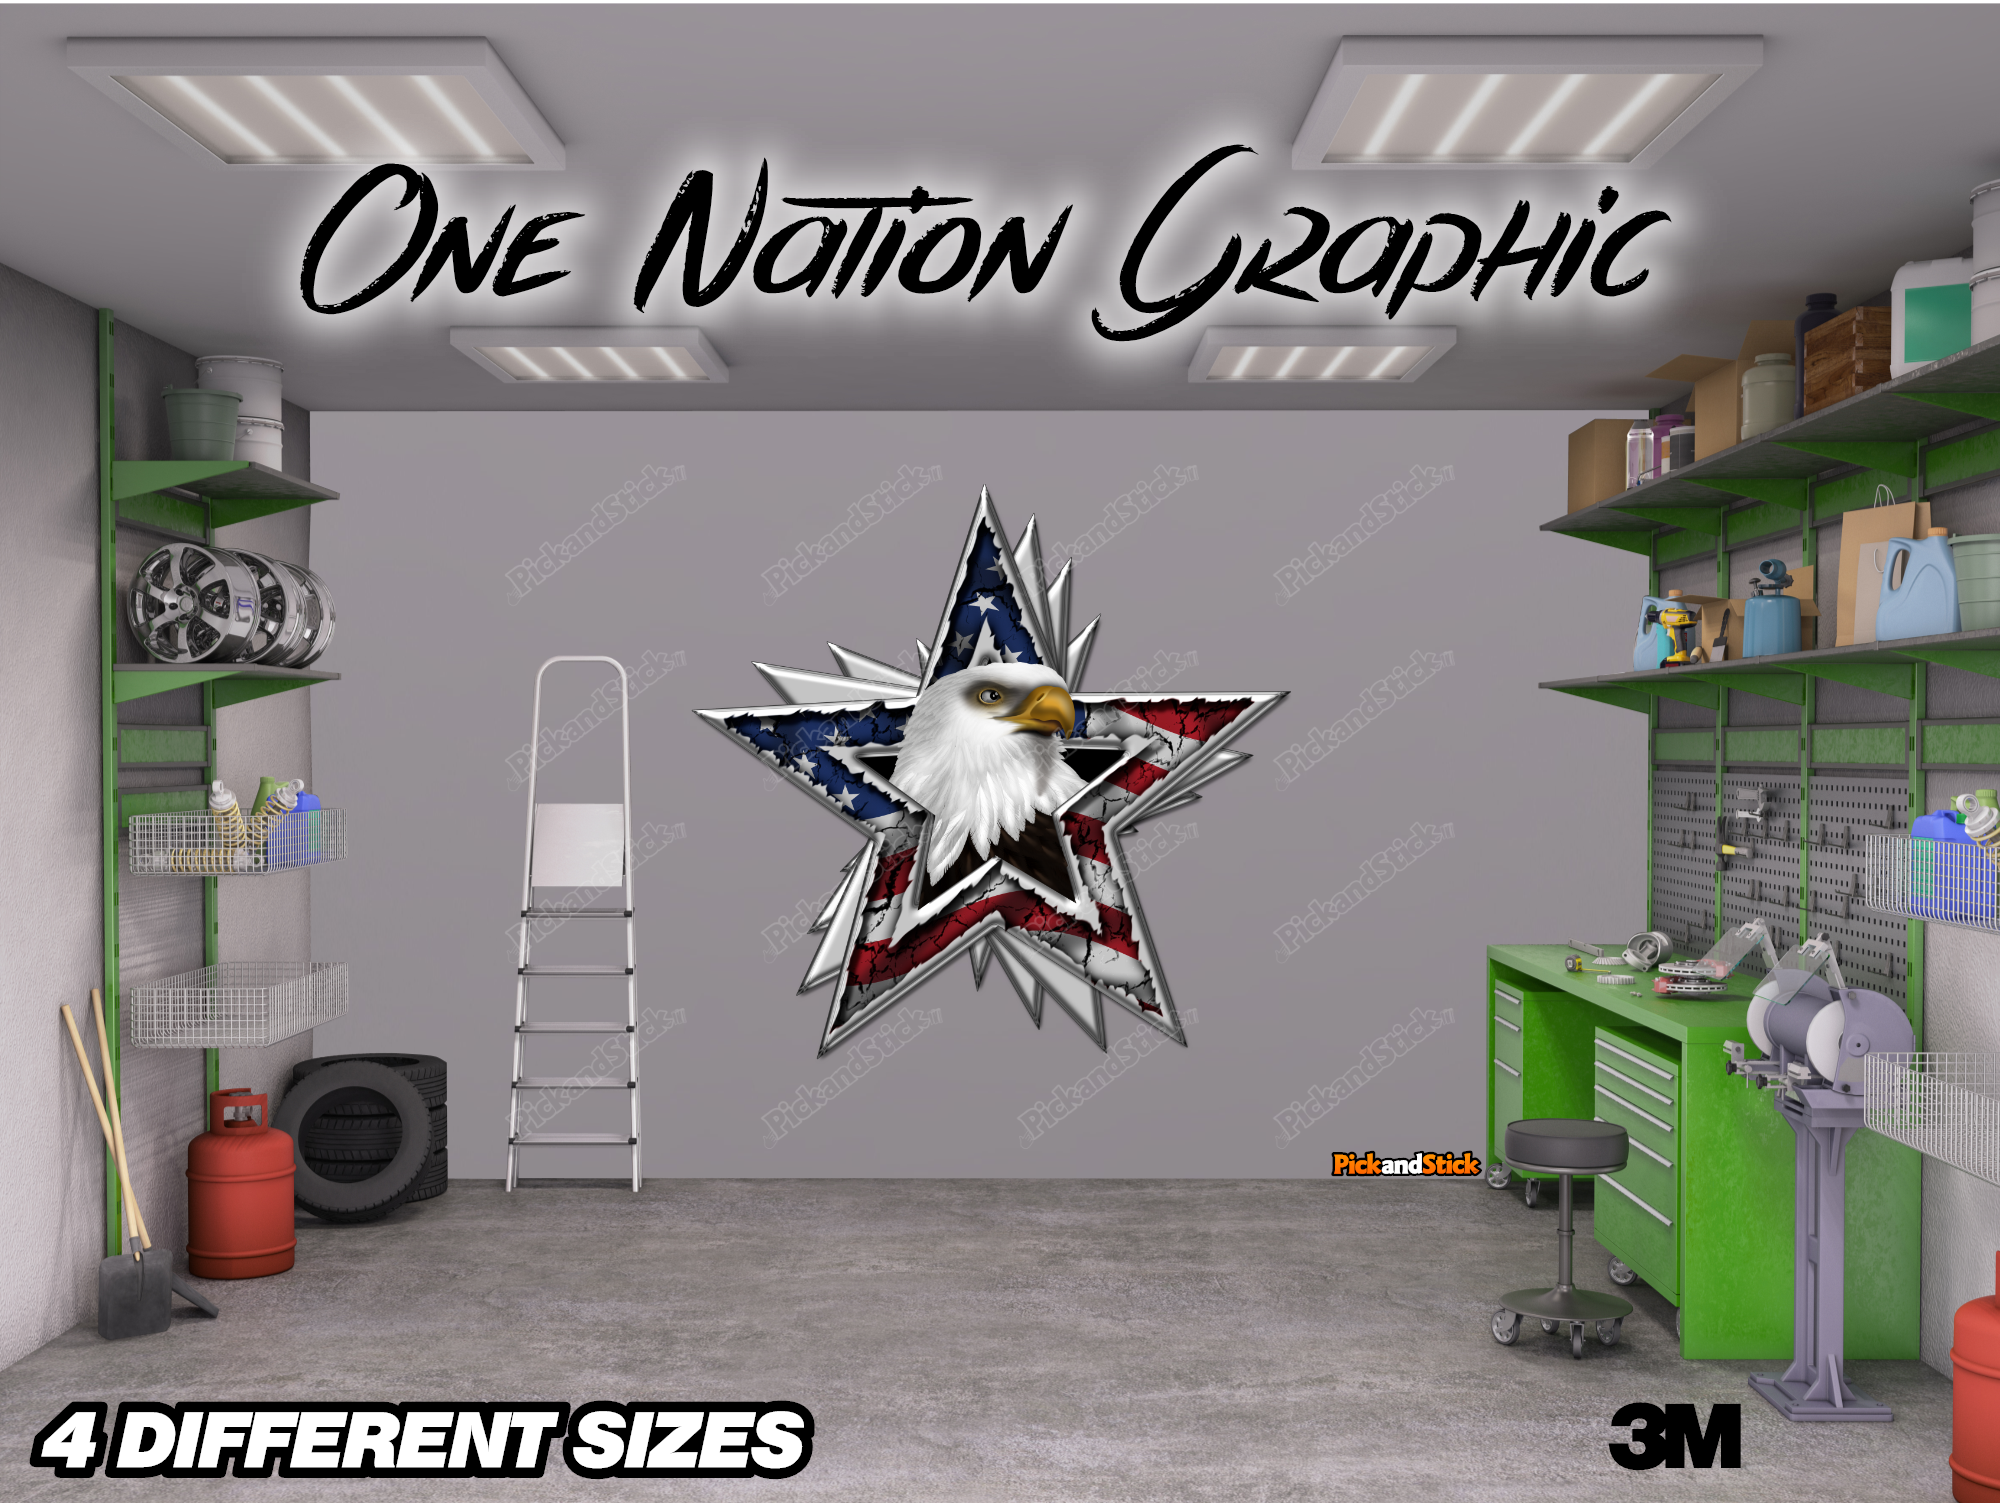 One Nation Wall Graphic - PickandStickcom